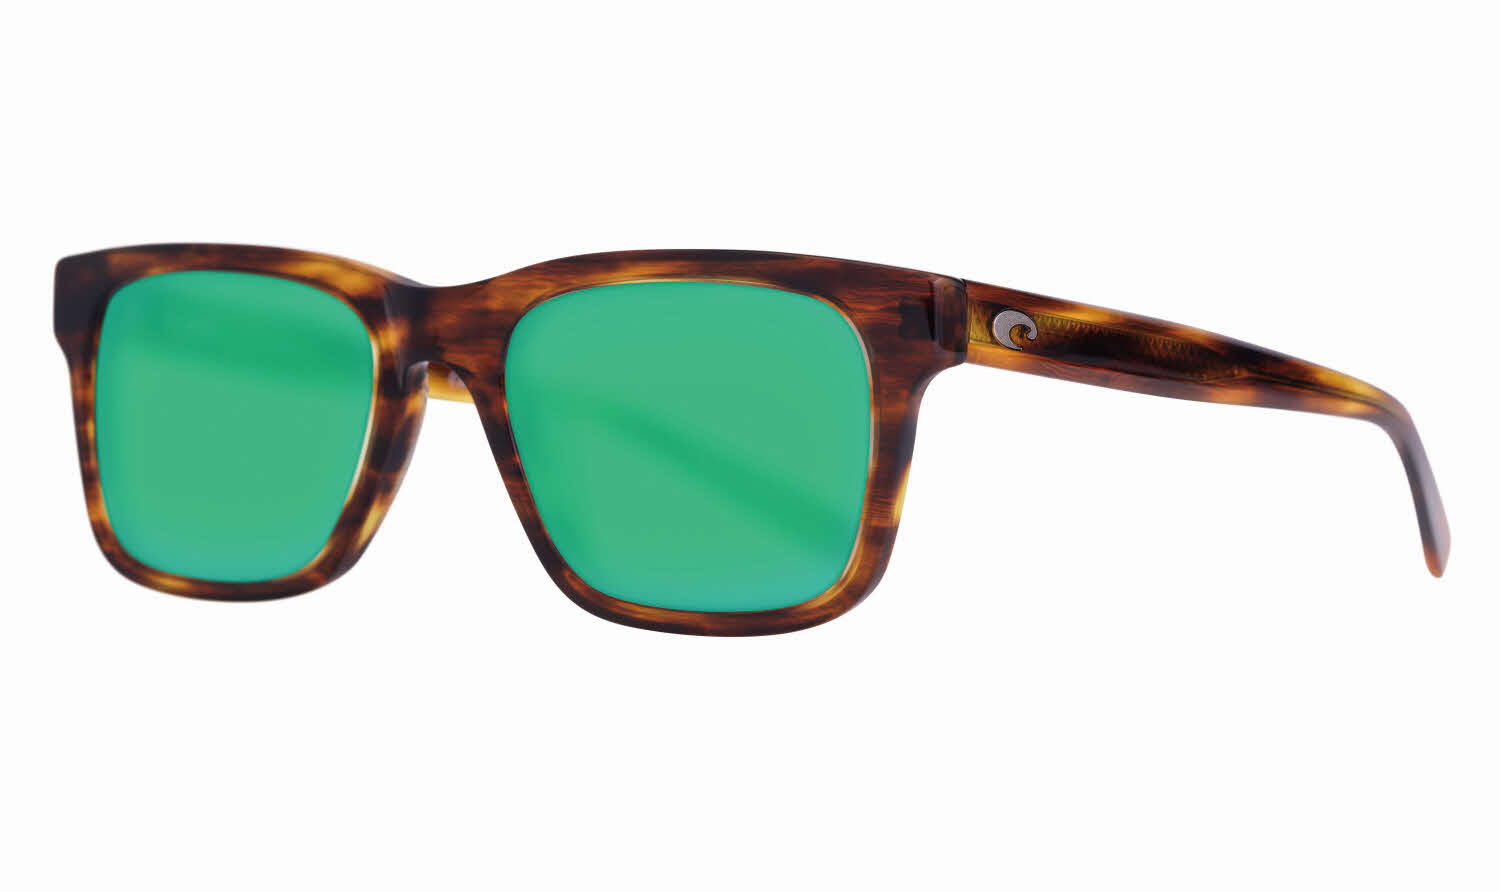 Costa Tybee - Del Mar Collection Sunglasses